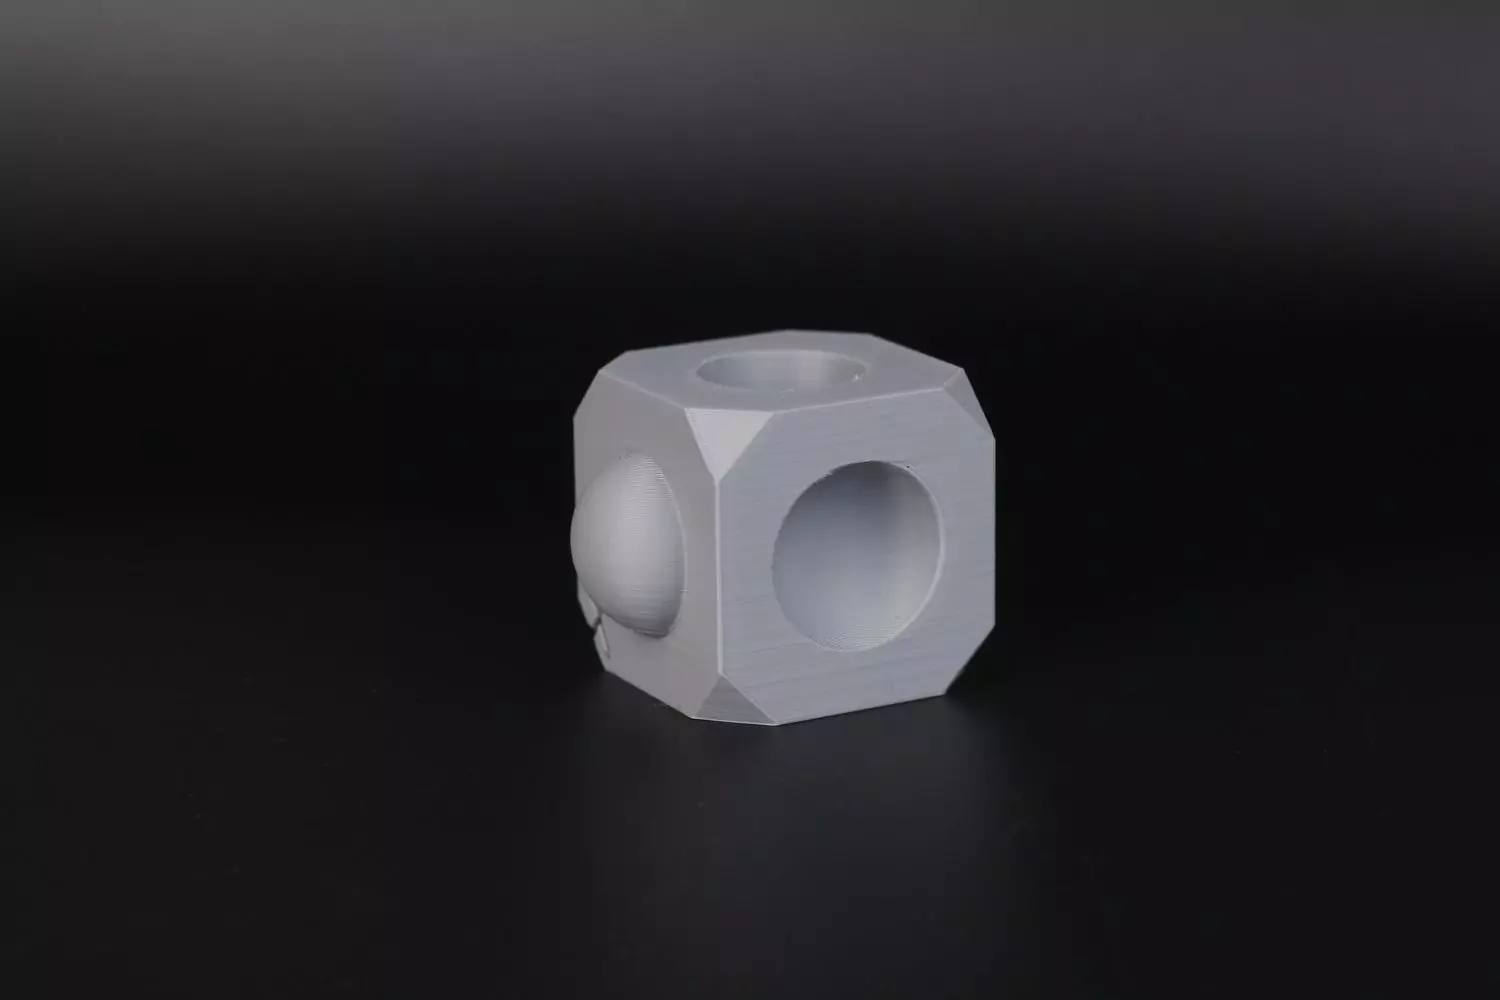 40mm Zaribo Calibration Cube Bambu Lab X1 Review3 | Bambu Lab X1 Review: Just as Good